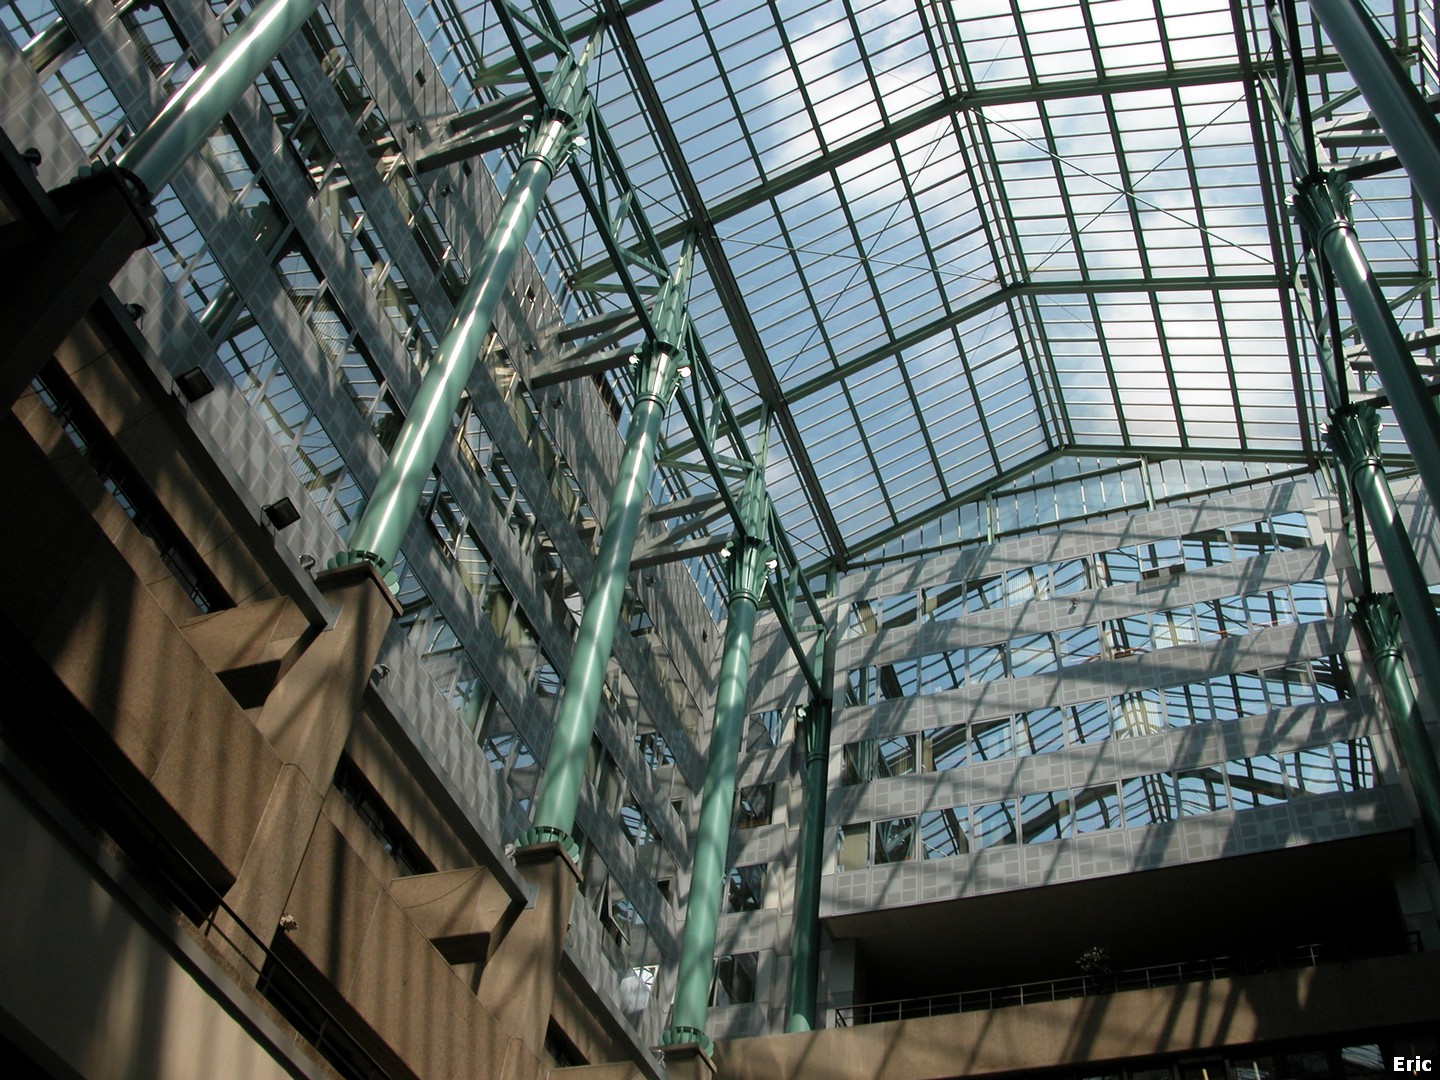  Gare du Nord